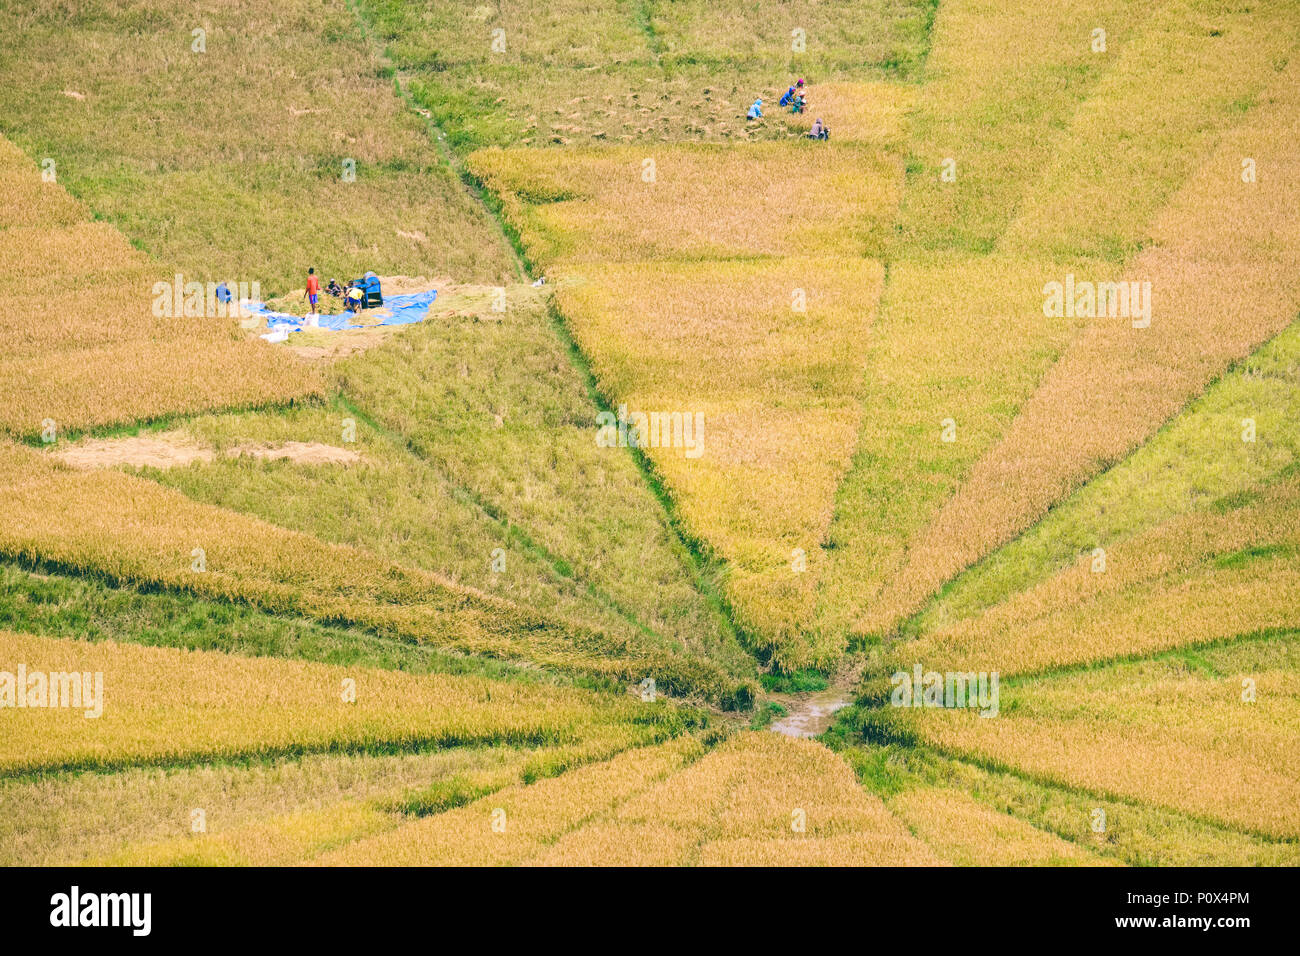 Farmers harvesting the spider web rice fields in Cancar Village, near Ruteng, Manggarai Regency, island of Flores, Indonesia. Stock Photo